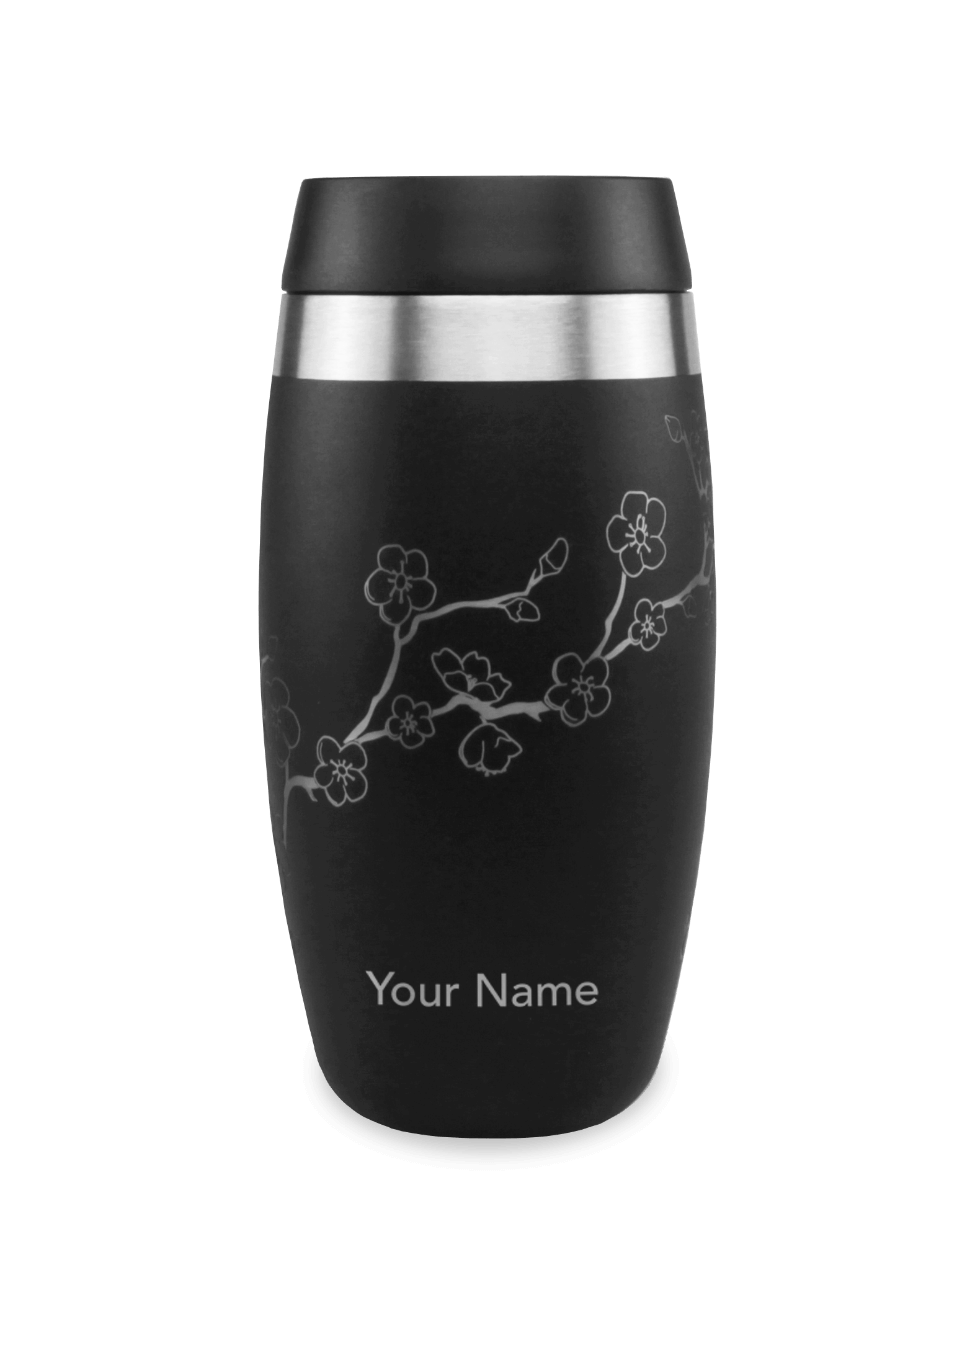 Personalised coffee flask in black floral design